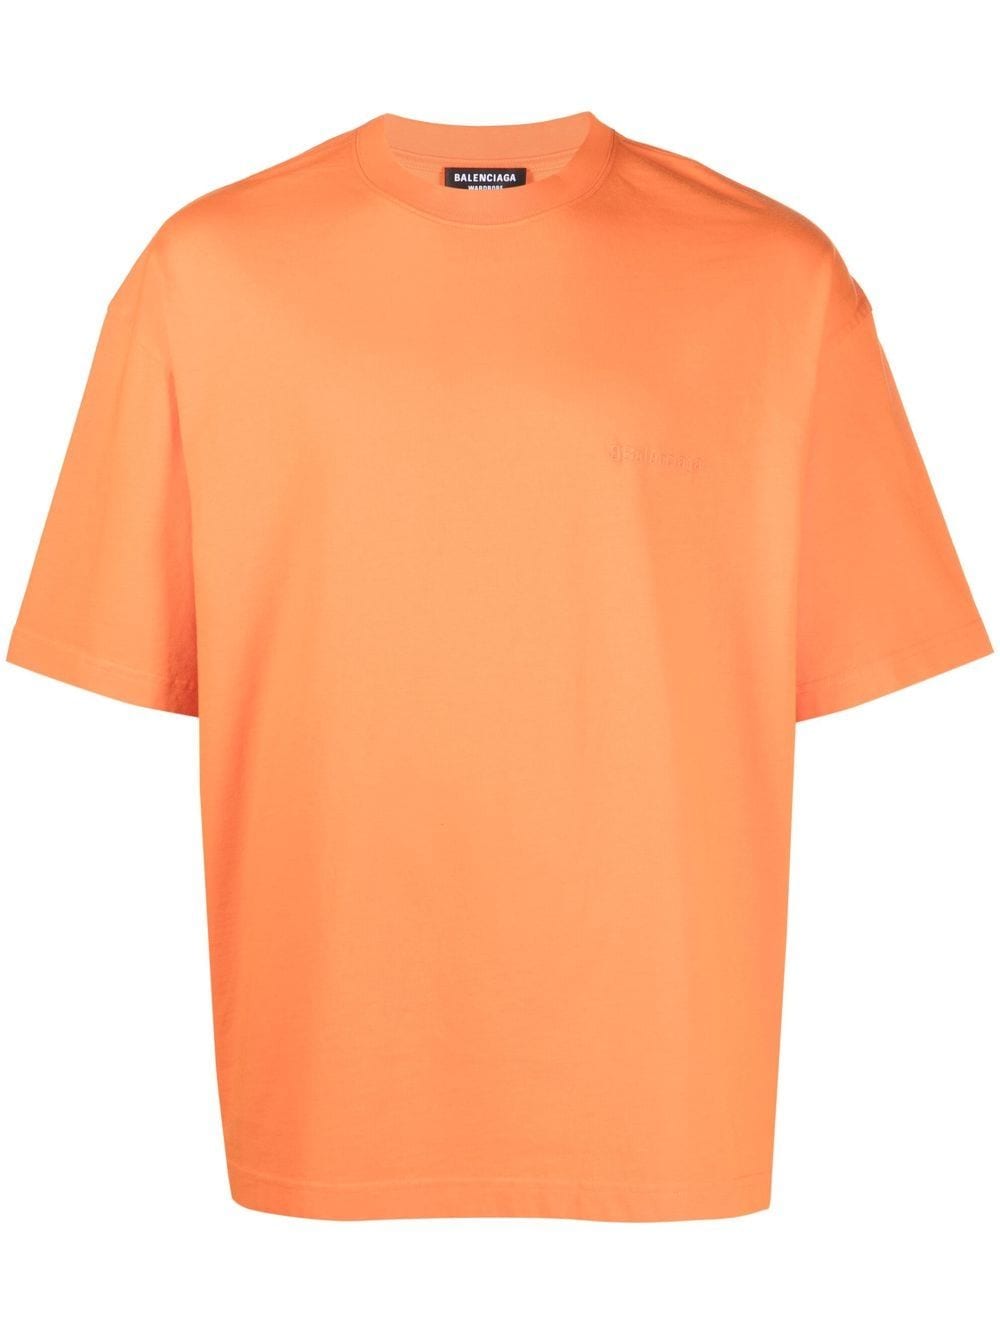 Balenciaga BB embroidered logo T-shirt - Orange